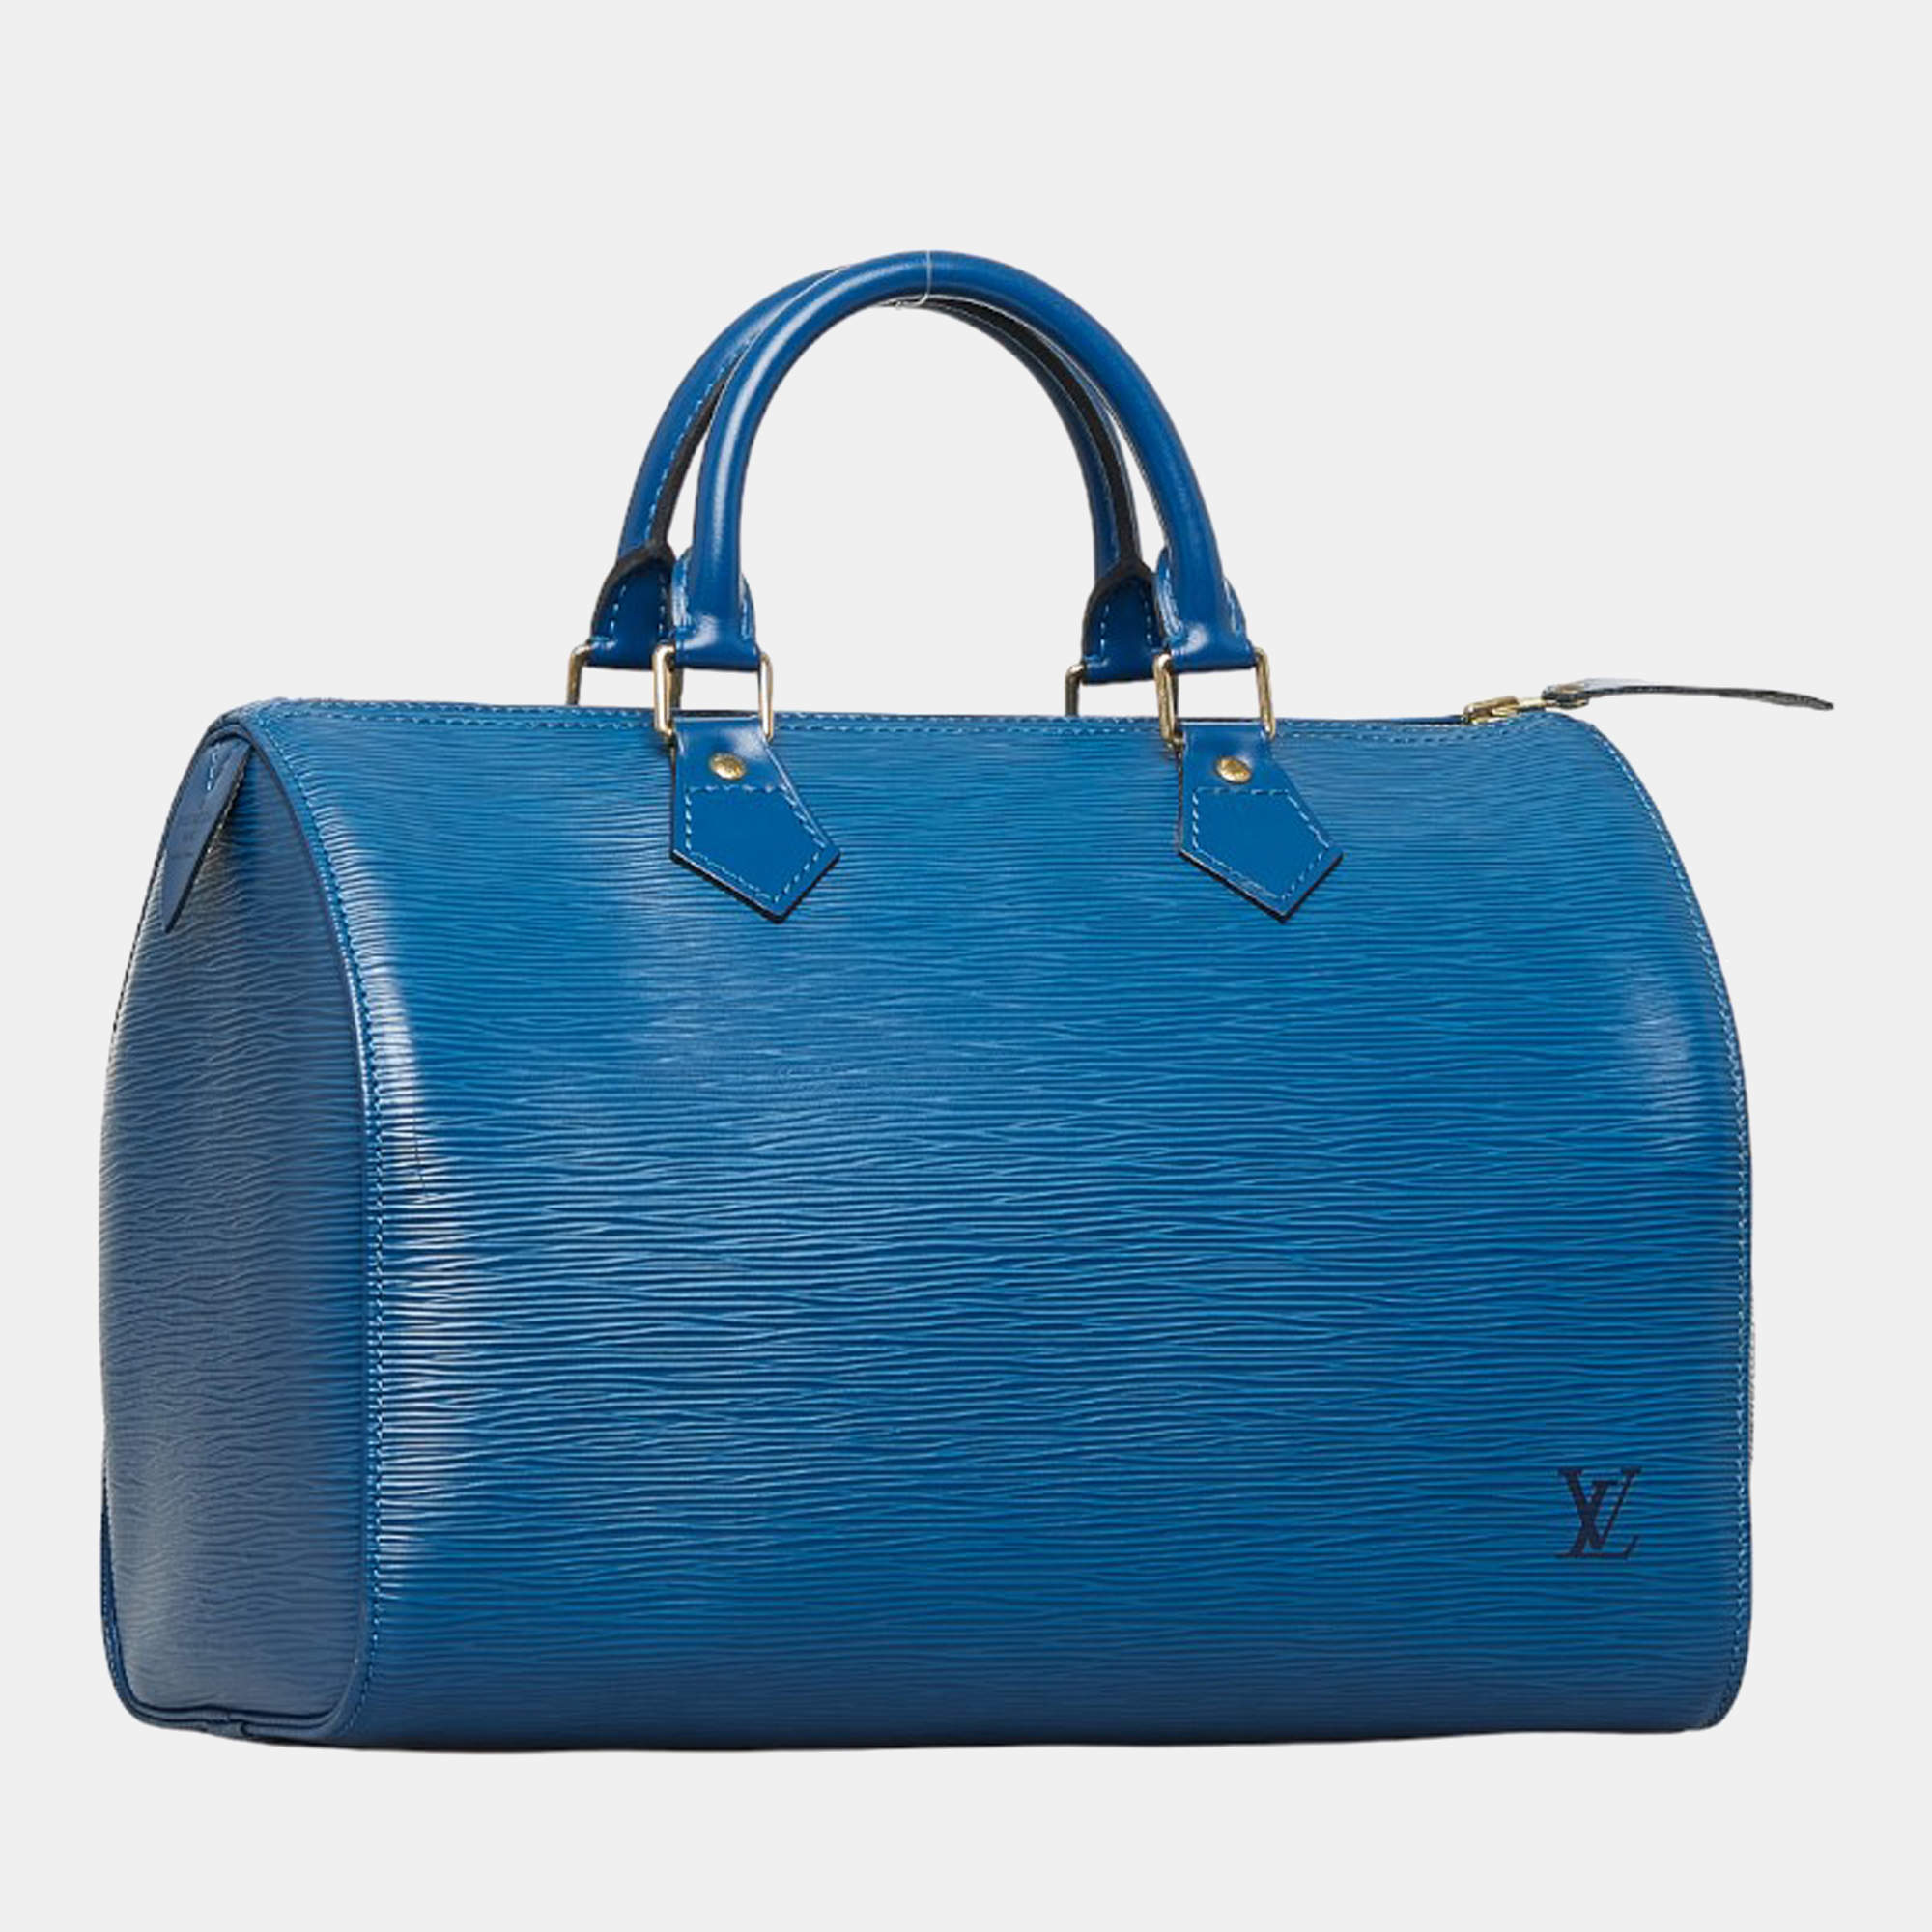 Louis Vuitton Epi Speedy 30 Handbag bag Color Green used from japan